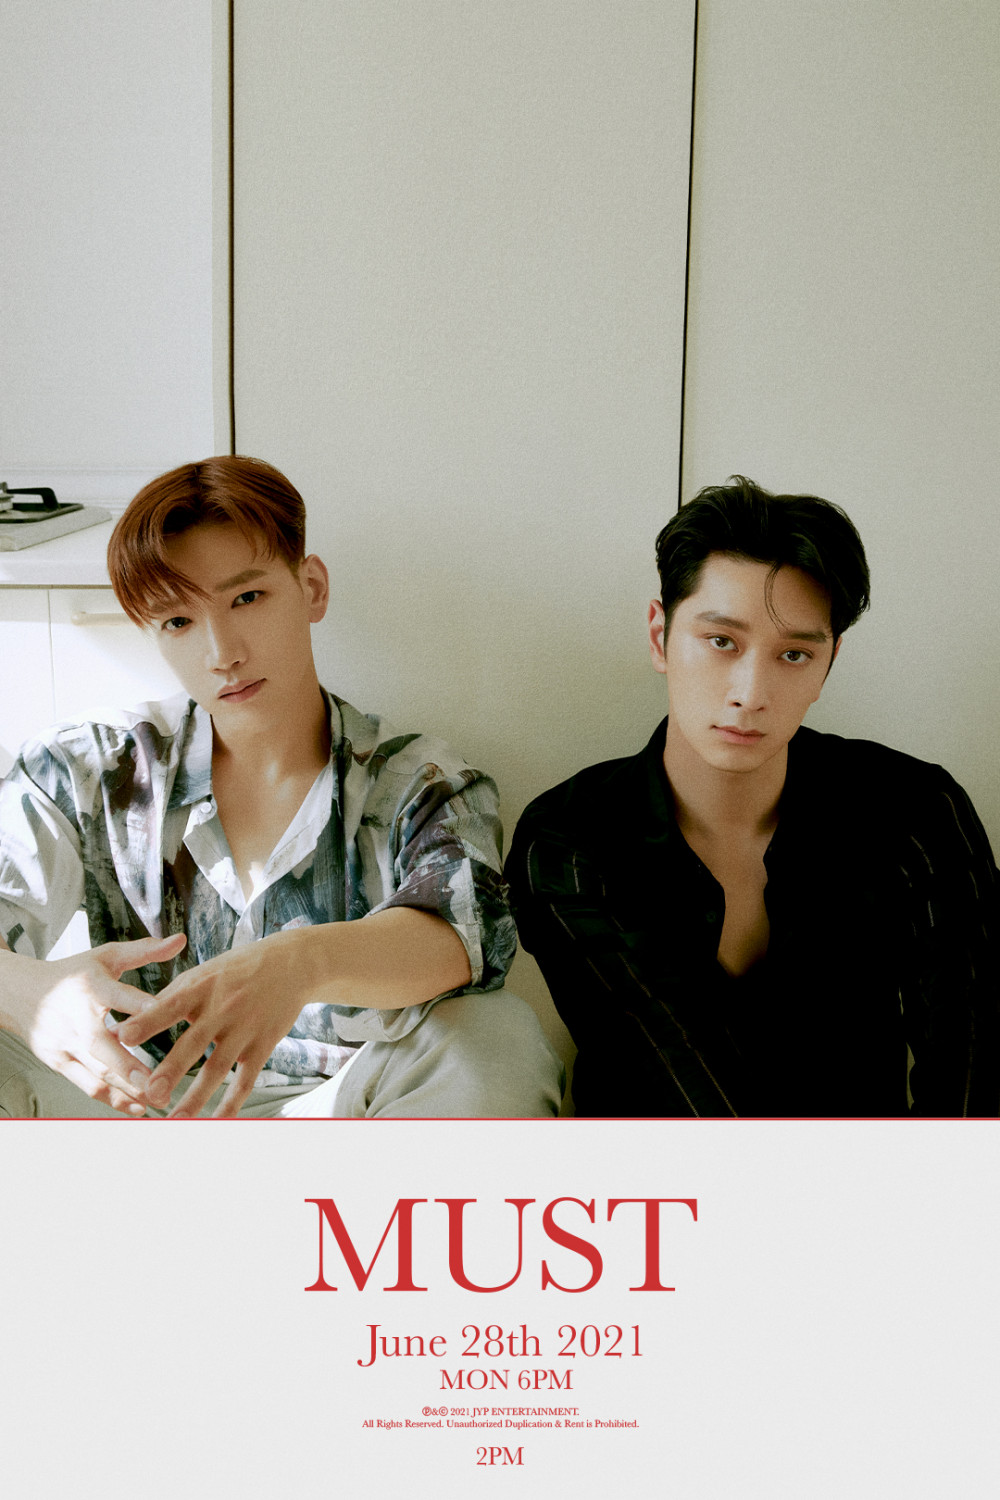 [Камбэк] 2PM альбом "MUST": "Make It" MV